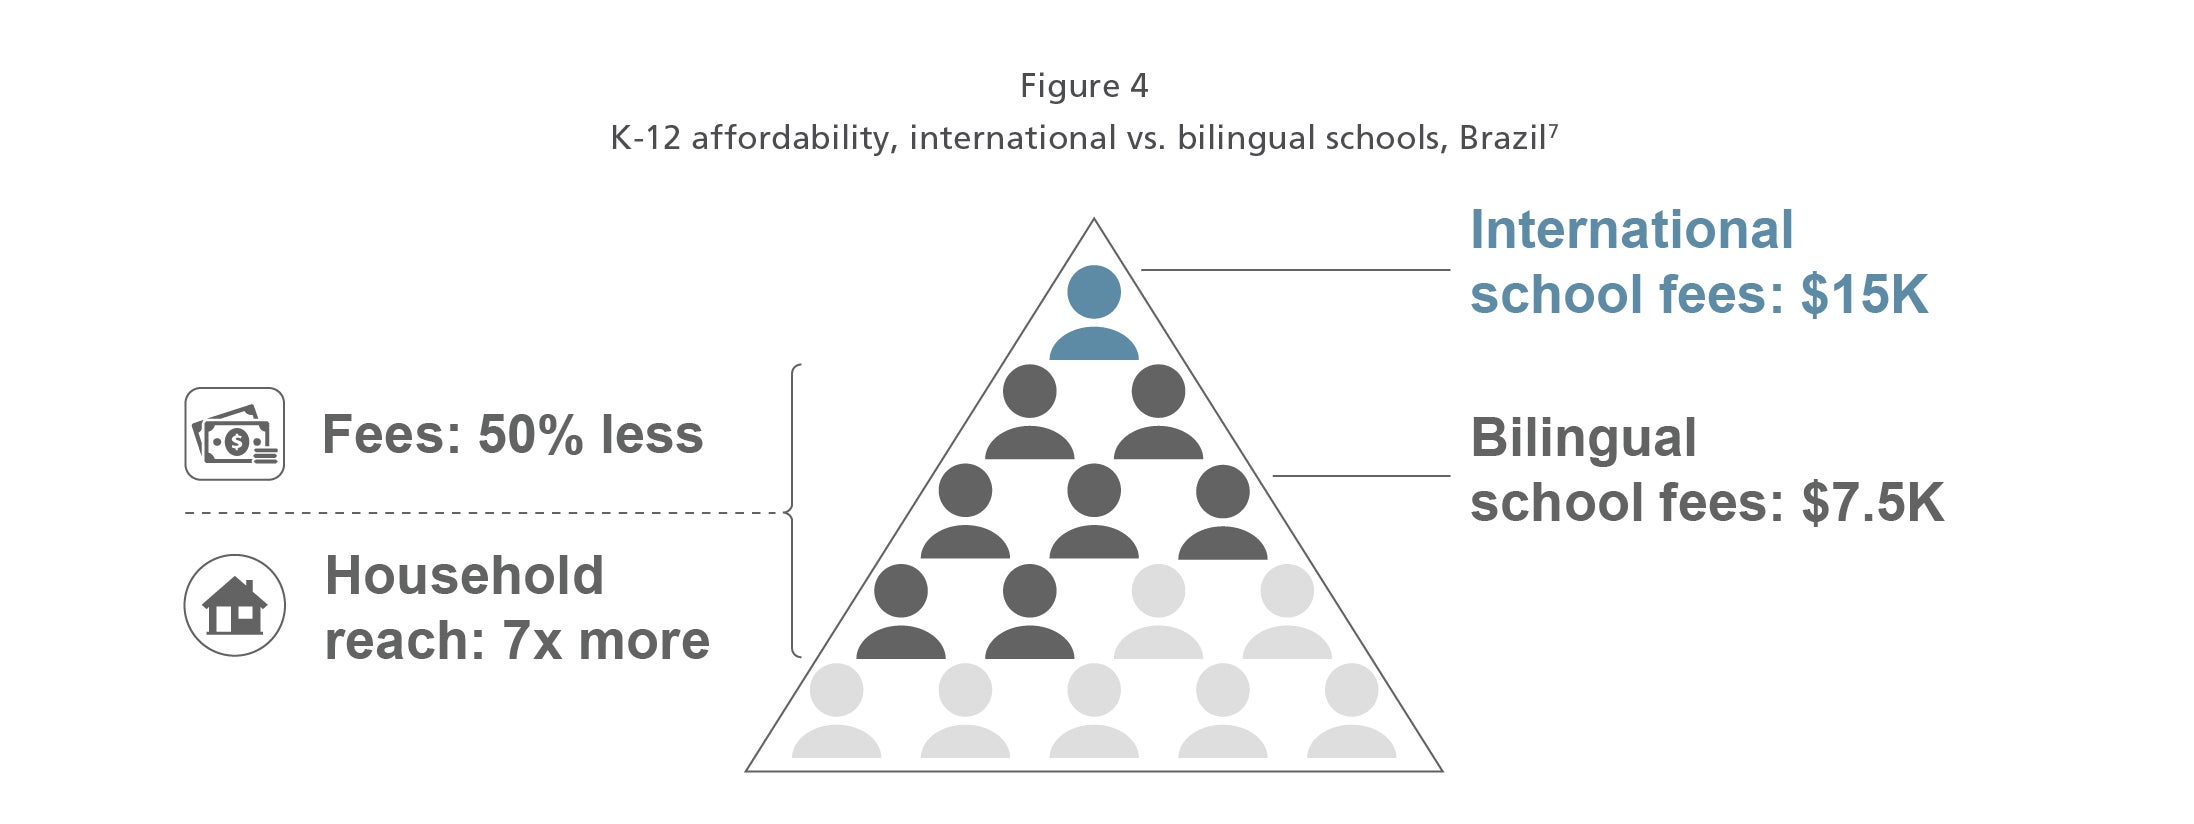 K-12 affordability of international v. bilingual schools in Brazil